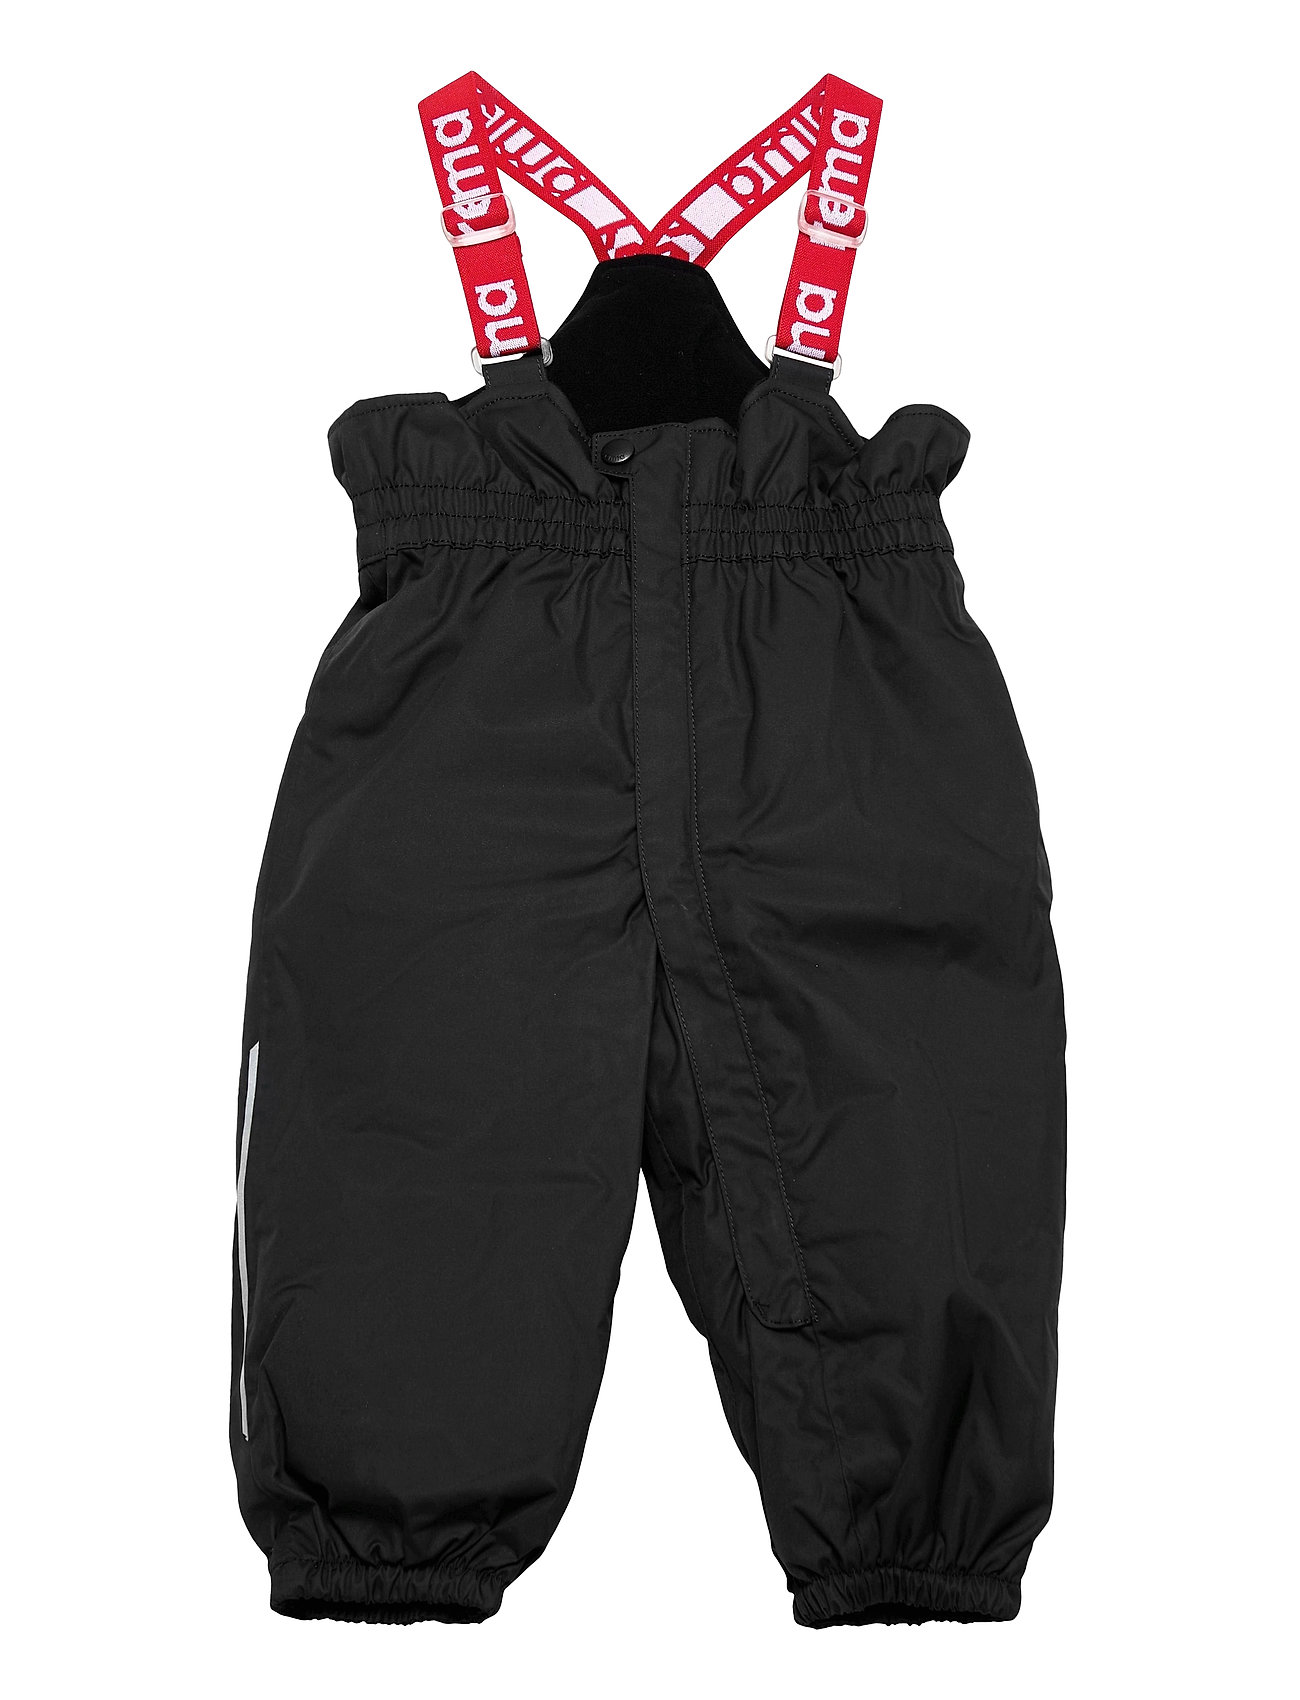 Reimatec Winter Pants, Stockholm Black,80 Cm Outerwear Snow/ski Clothing Snow/ski Pants Musta Reima